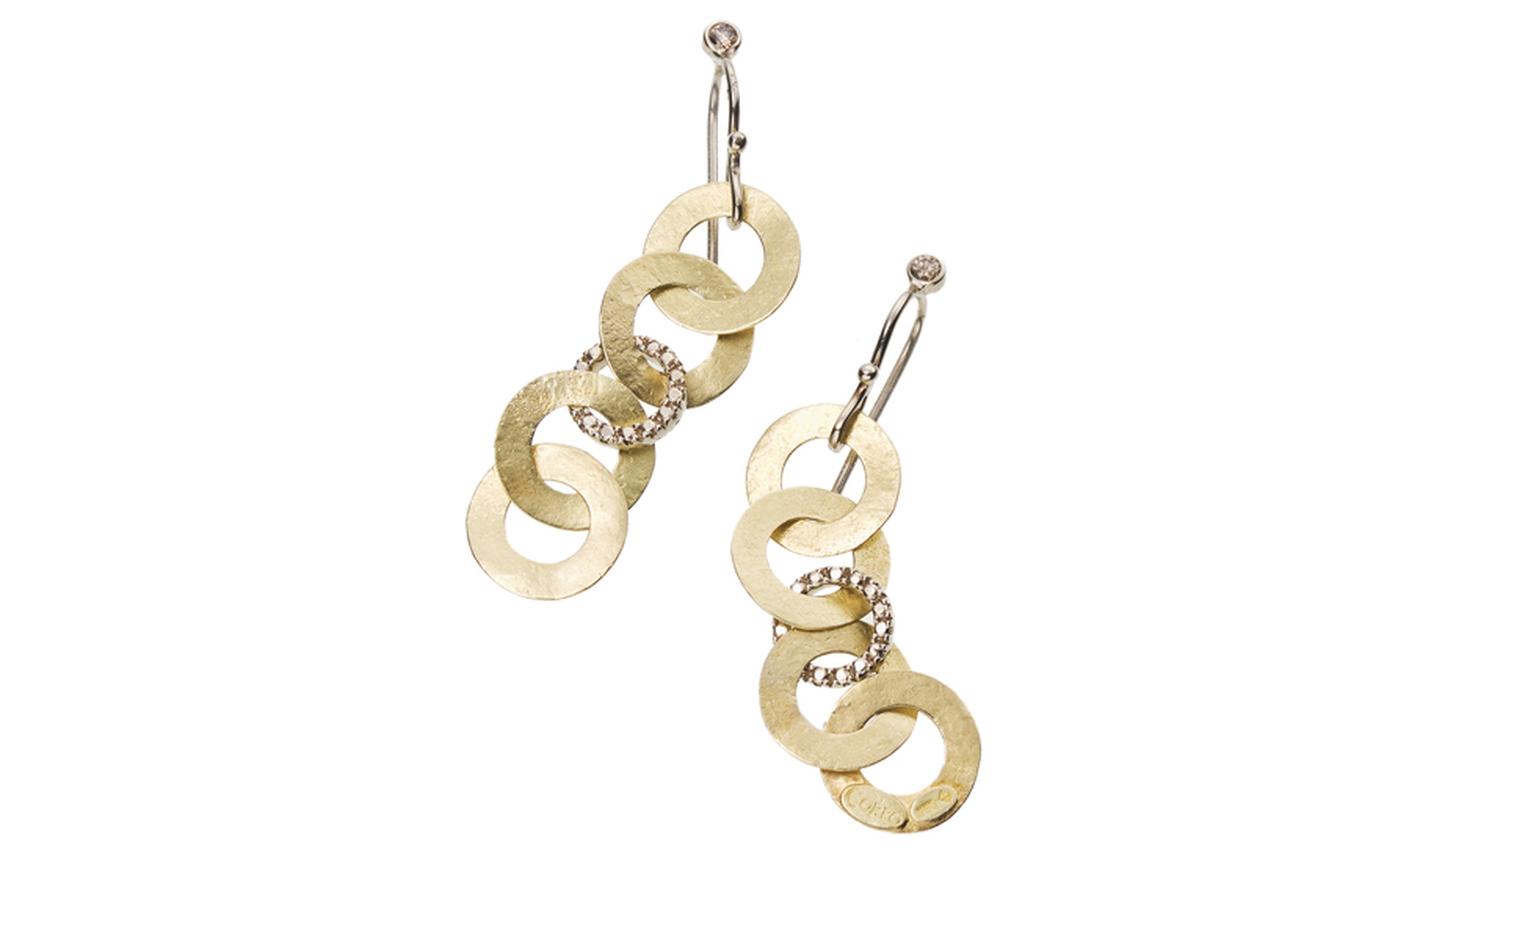 H STERN BALLET DU CORPO, G.21 drop earrings in yellow gold with diamonds. £3,200.